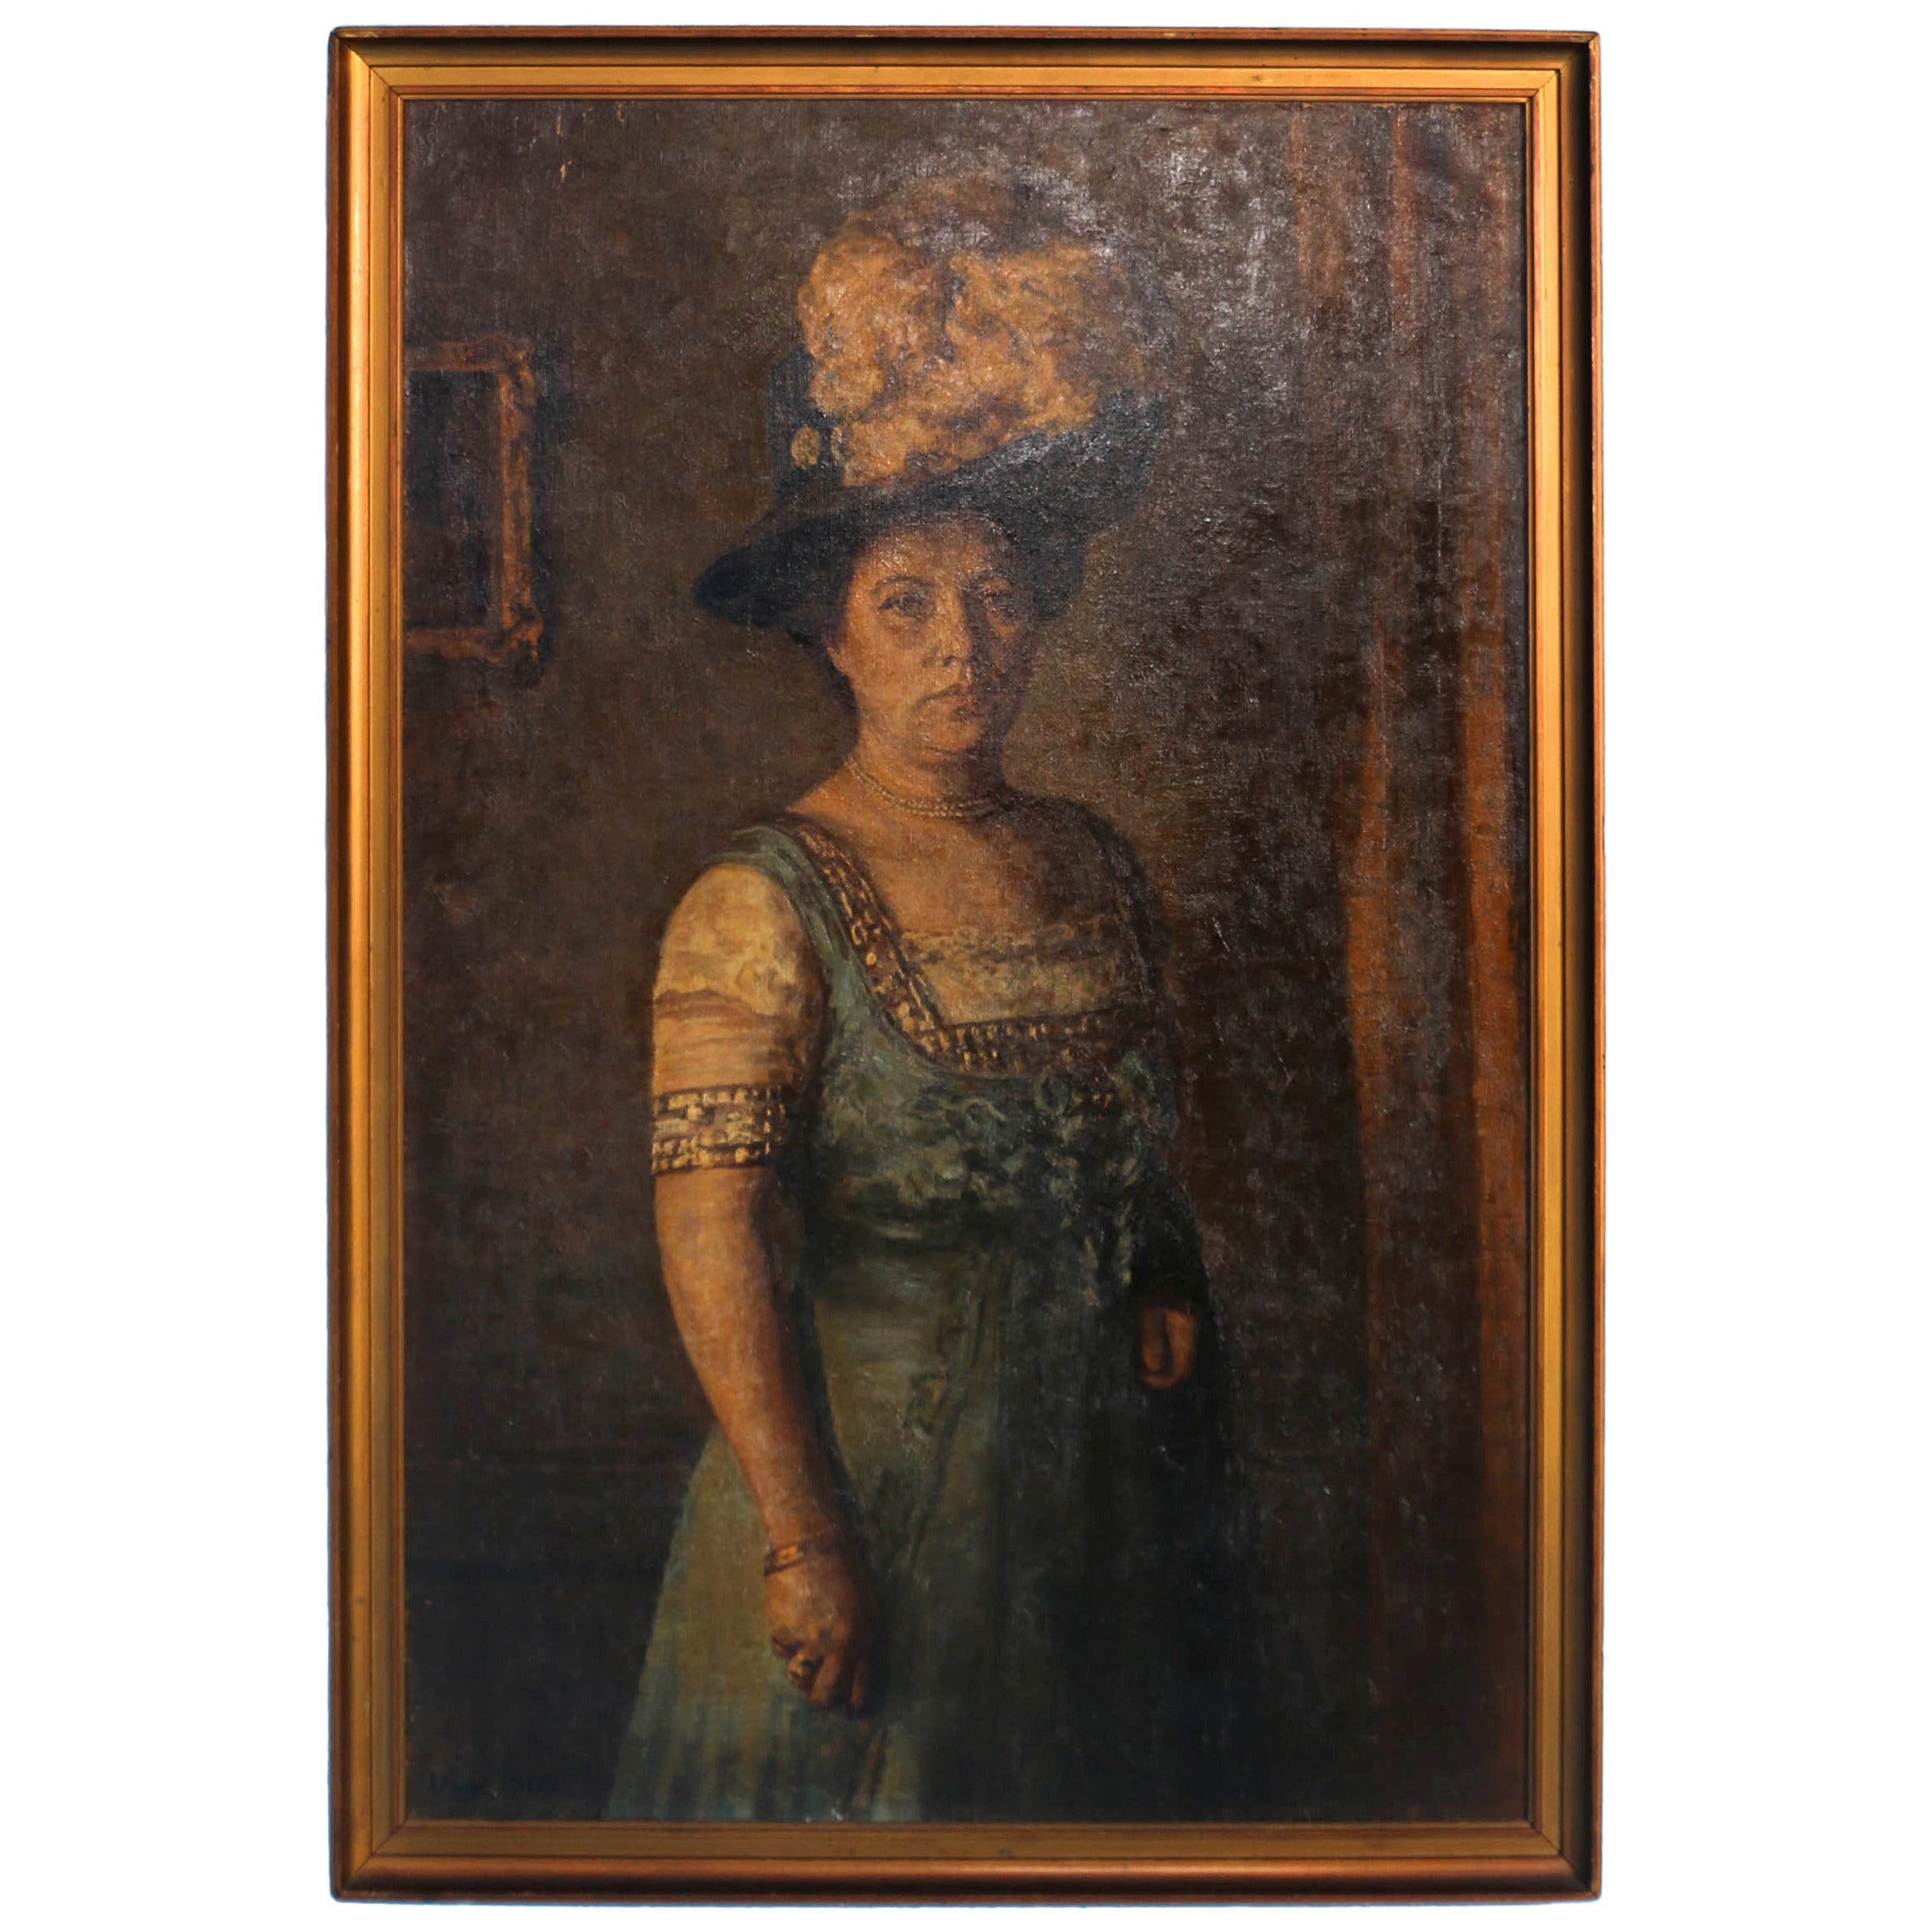 Original Oil on Canvas Portrait of Woman in Blue Dress, Signed Vigeland, 1909